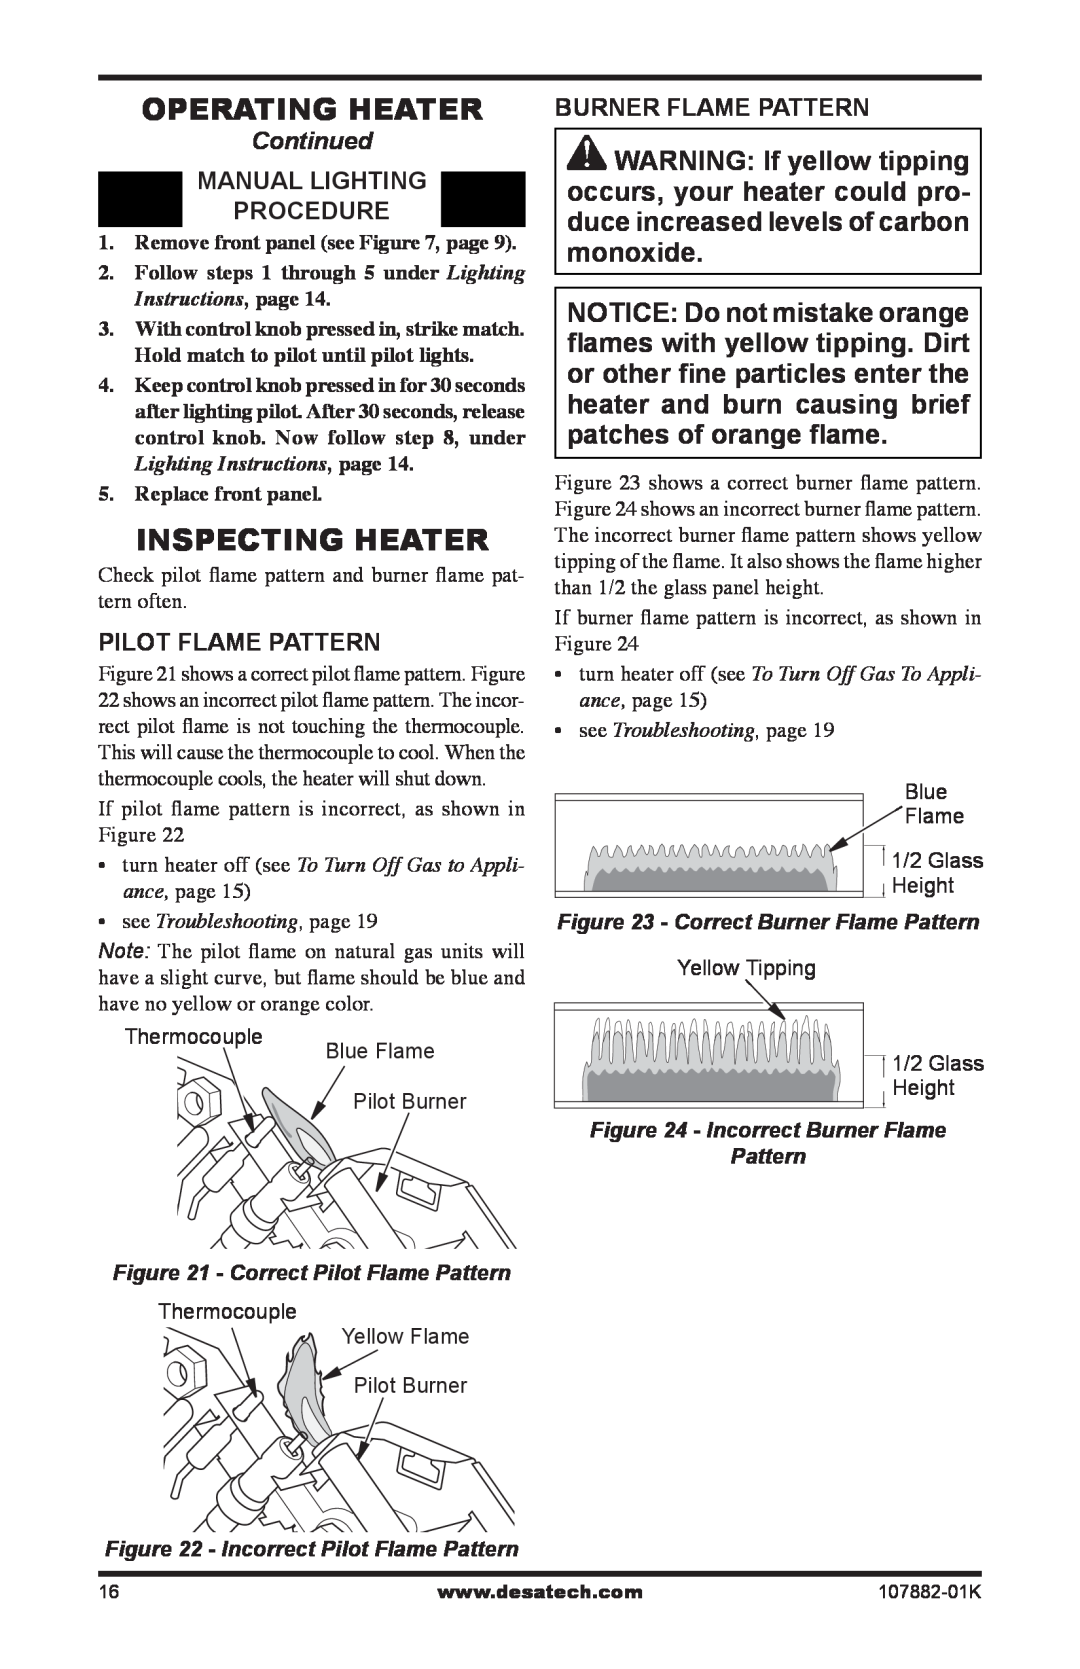 Desa CBN20TK Operating Heater, Inspecting Heater, Manual Lighting Procedure, Pilot Flame Pattern, Burner Flame Pattern 